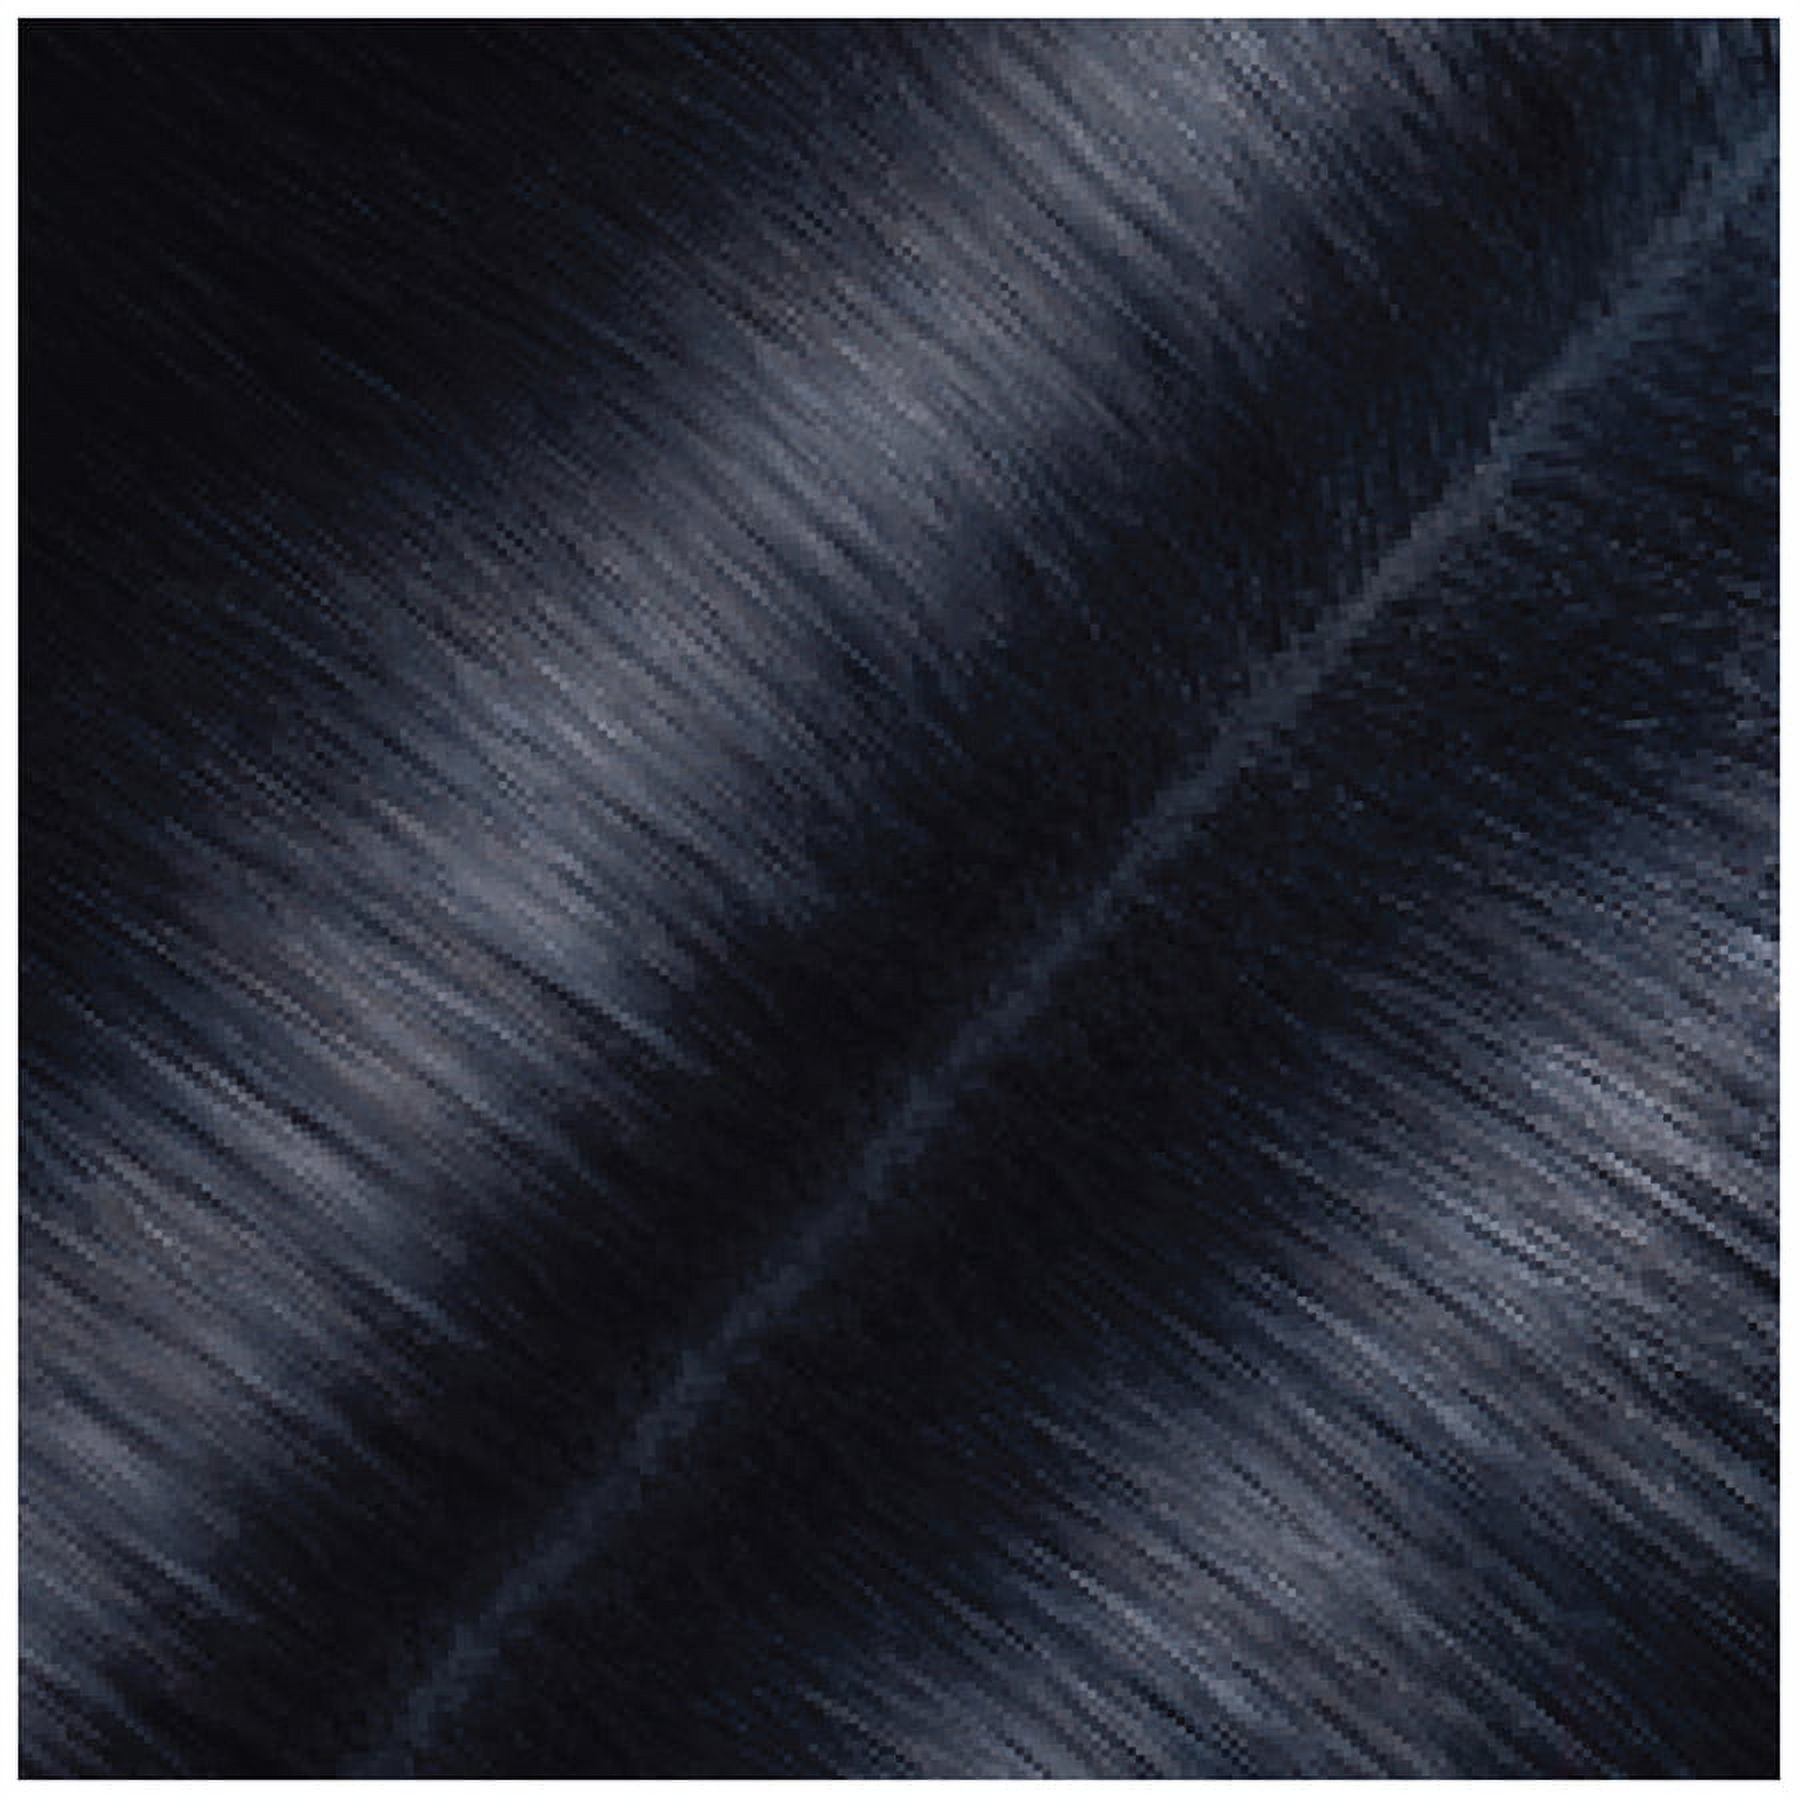 Garnier Express Retouch Gray Hair Concealer, Instant Coverage, Black, 0.34 fl oz - image 2 of 12